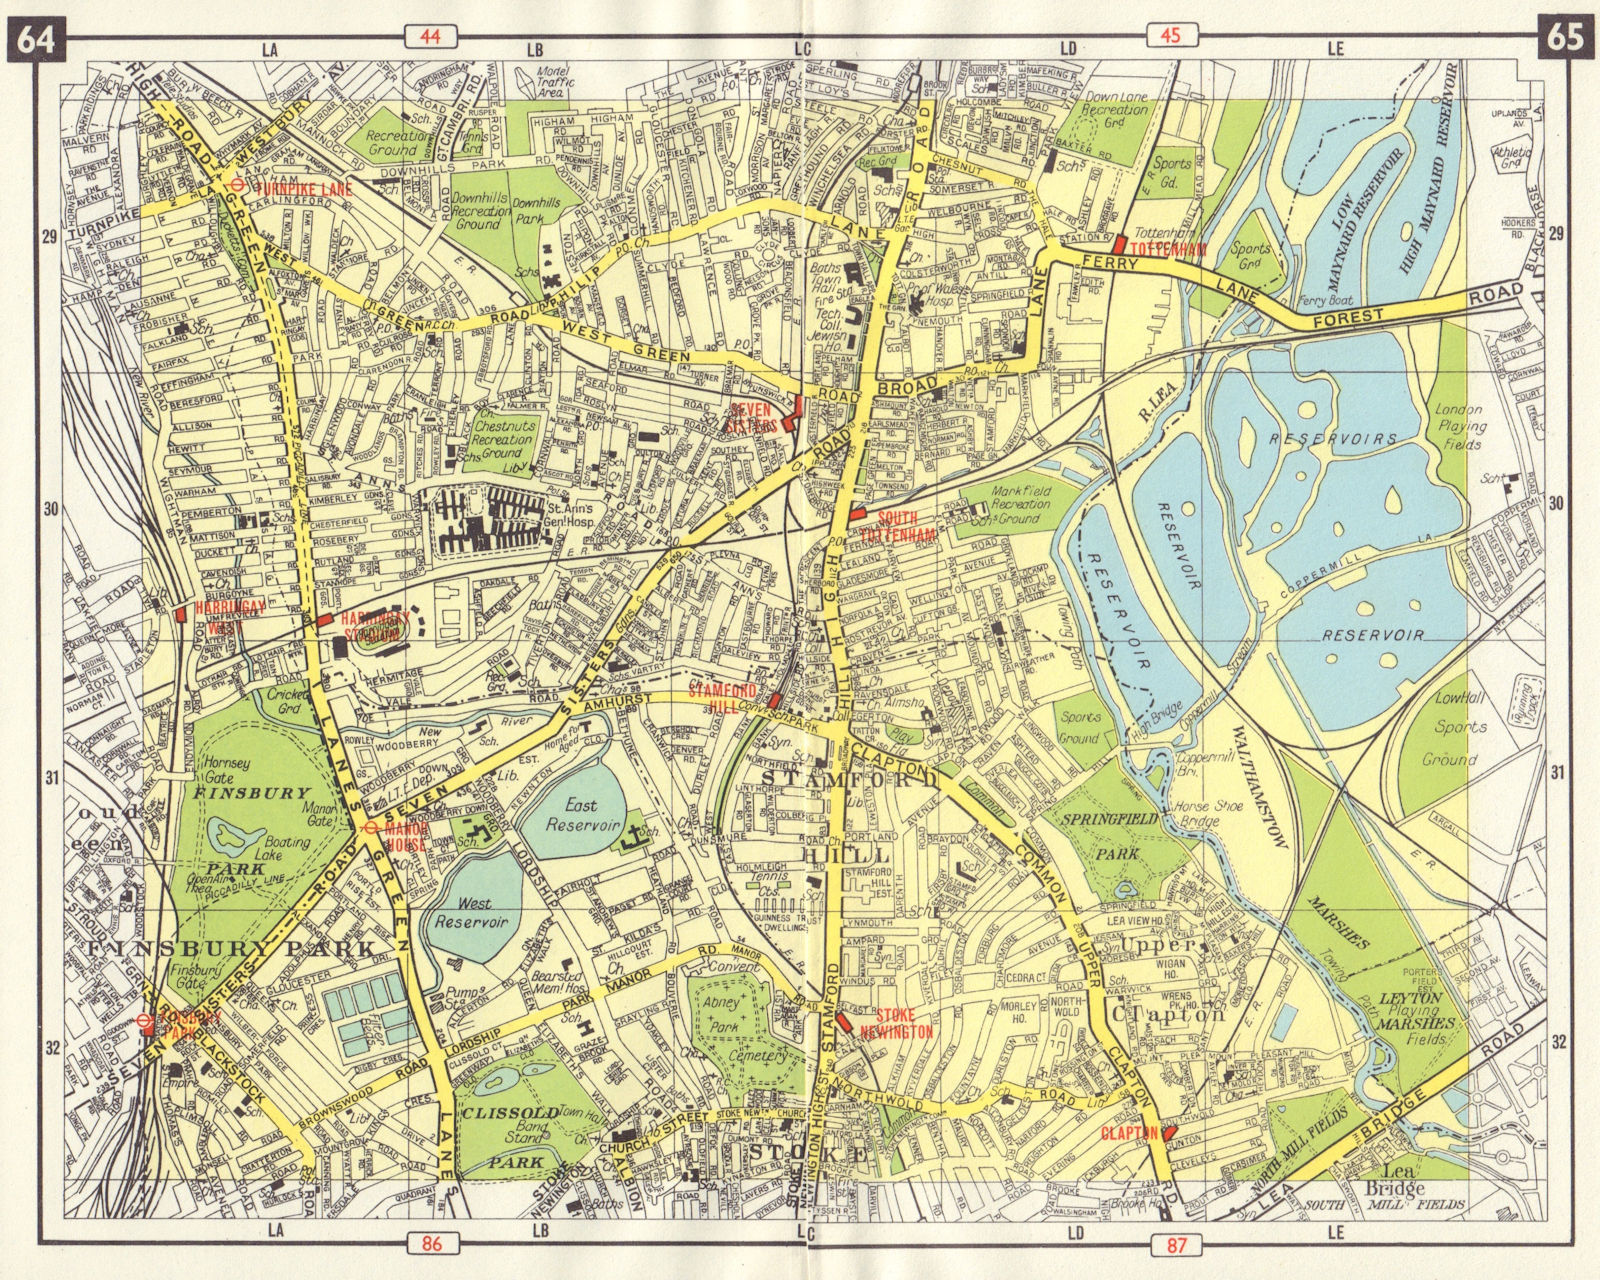 N LONDON Finsbury Park Bruce Grove Stamford Hill Finsbury Park Clapton 1965 map